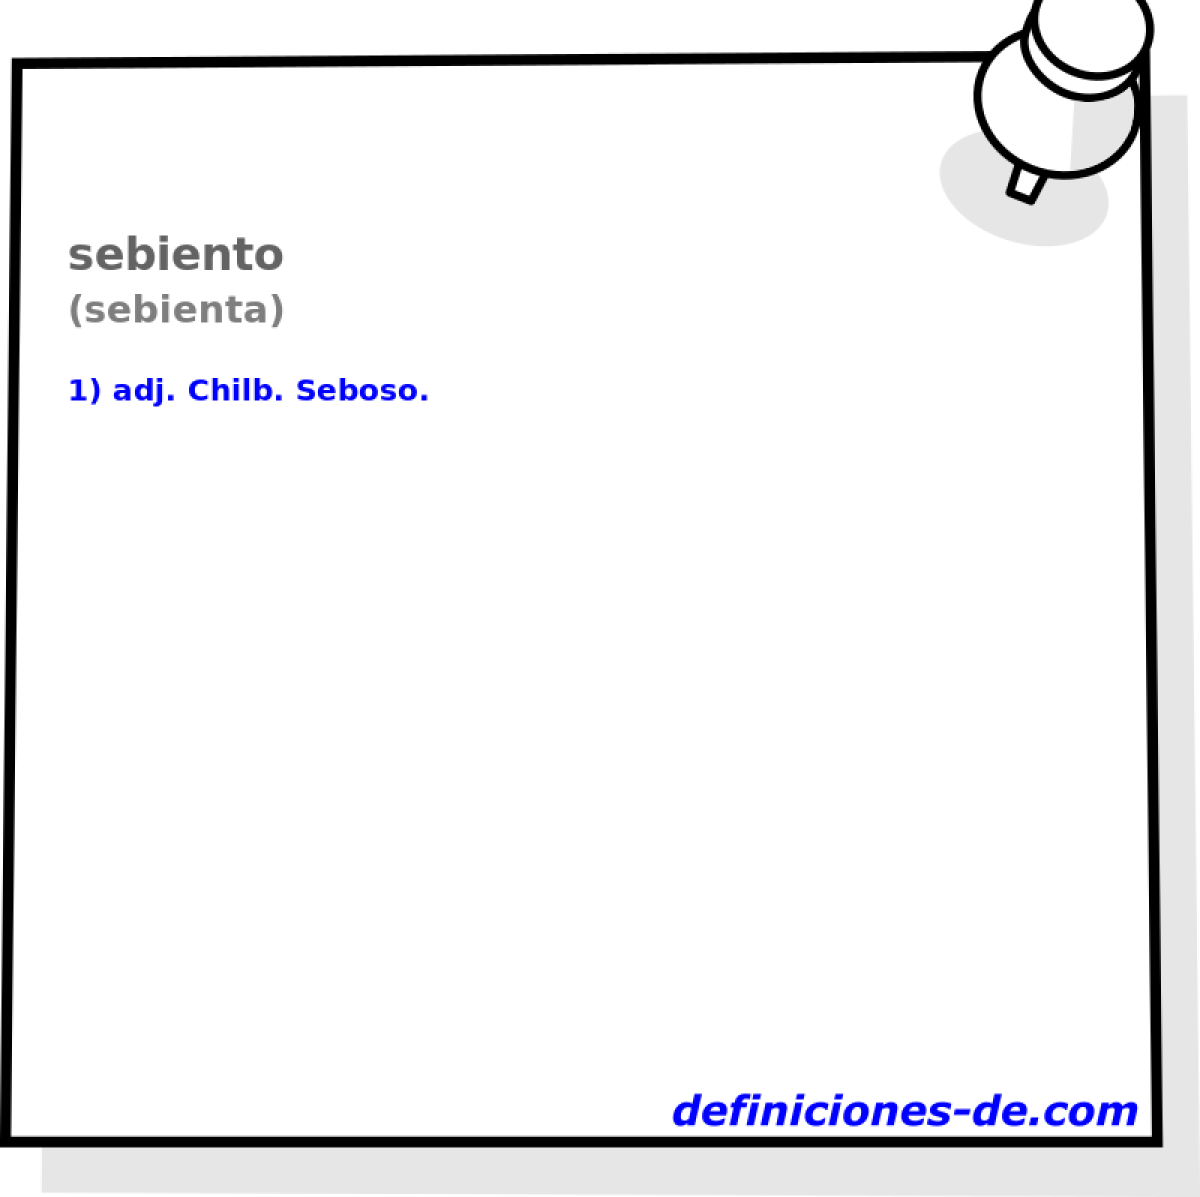 sebiento (sebienta)